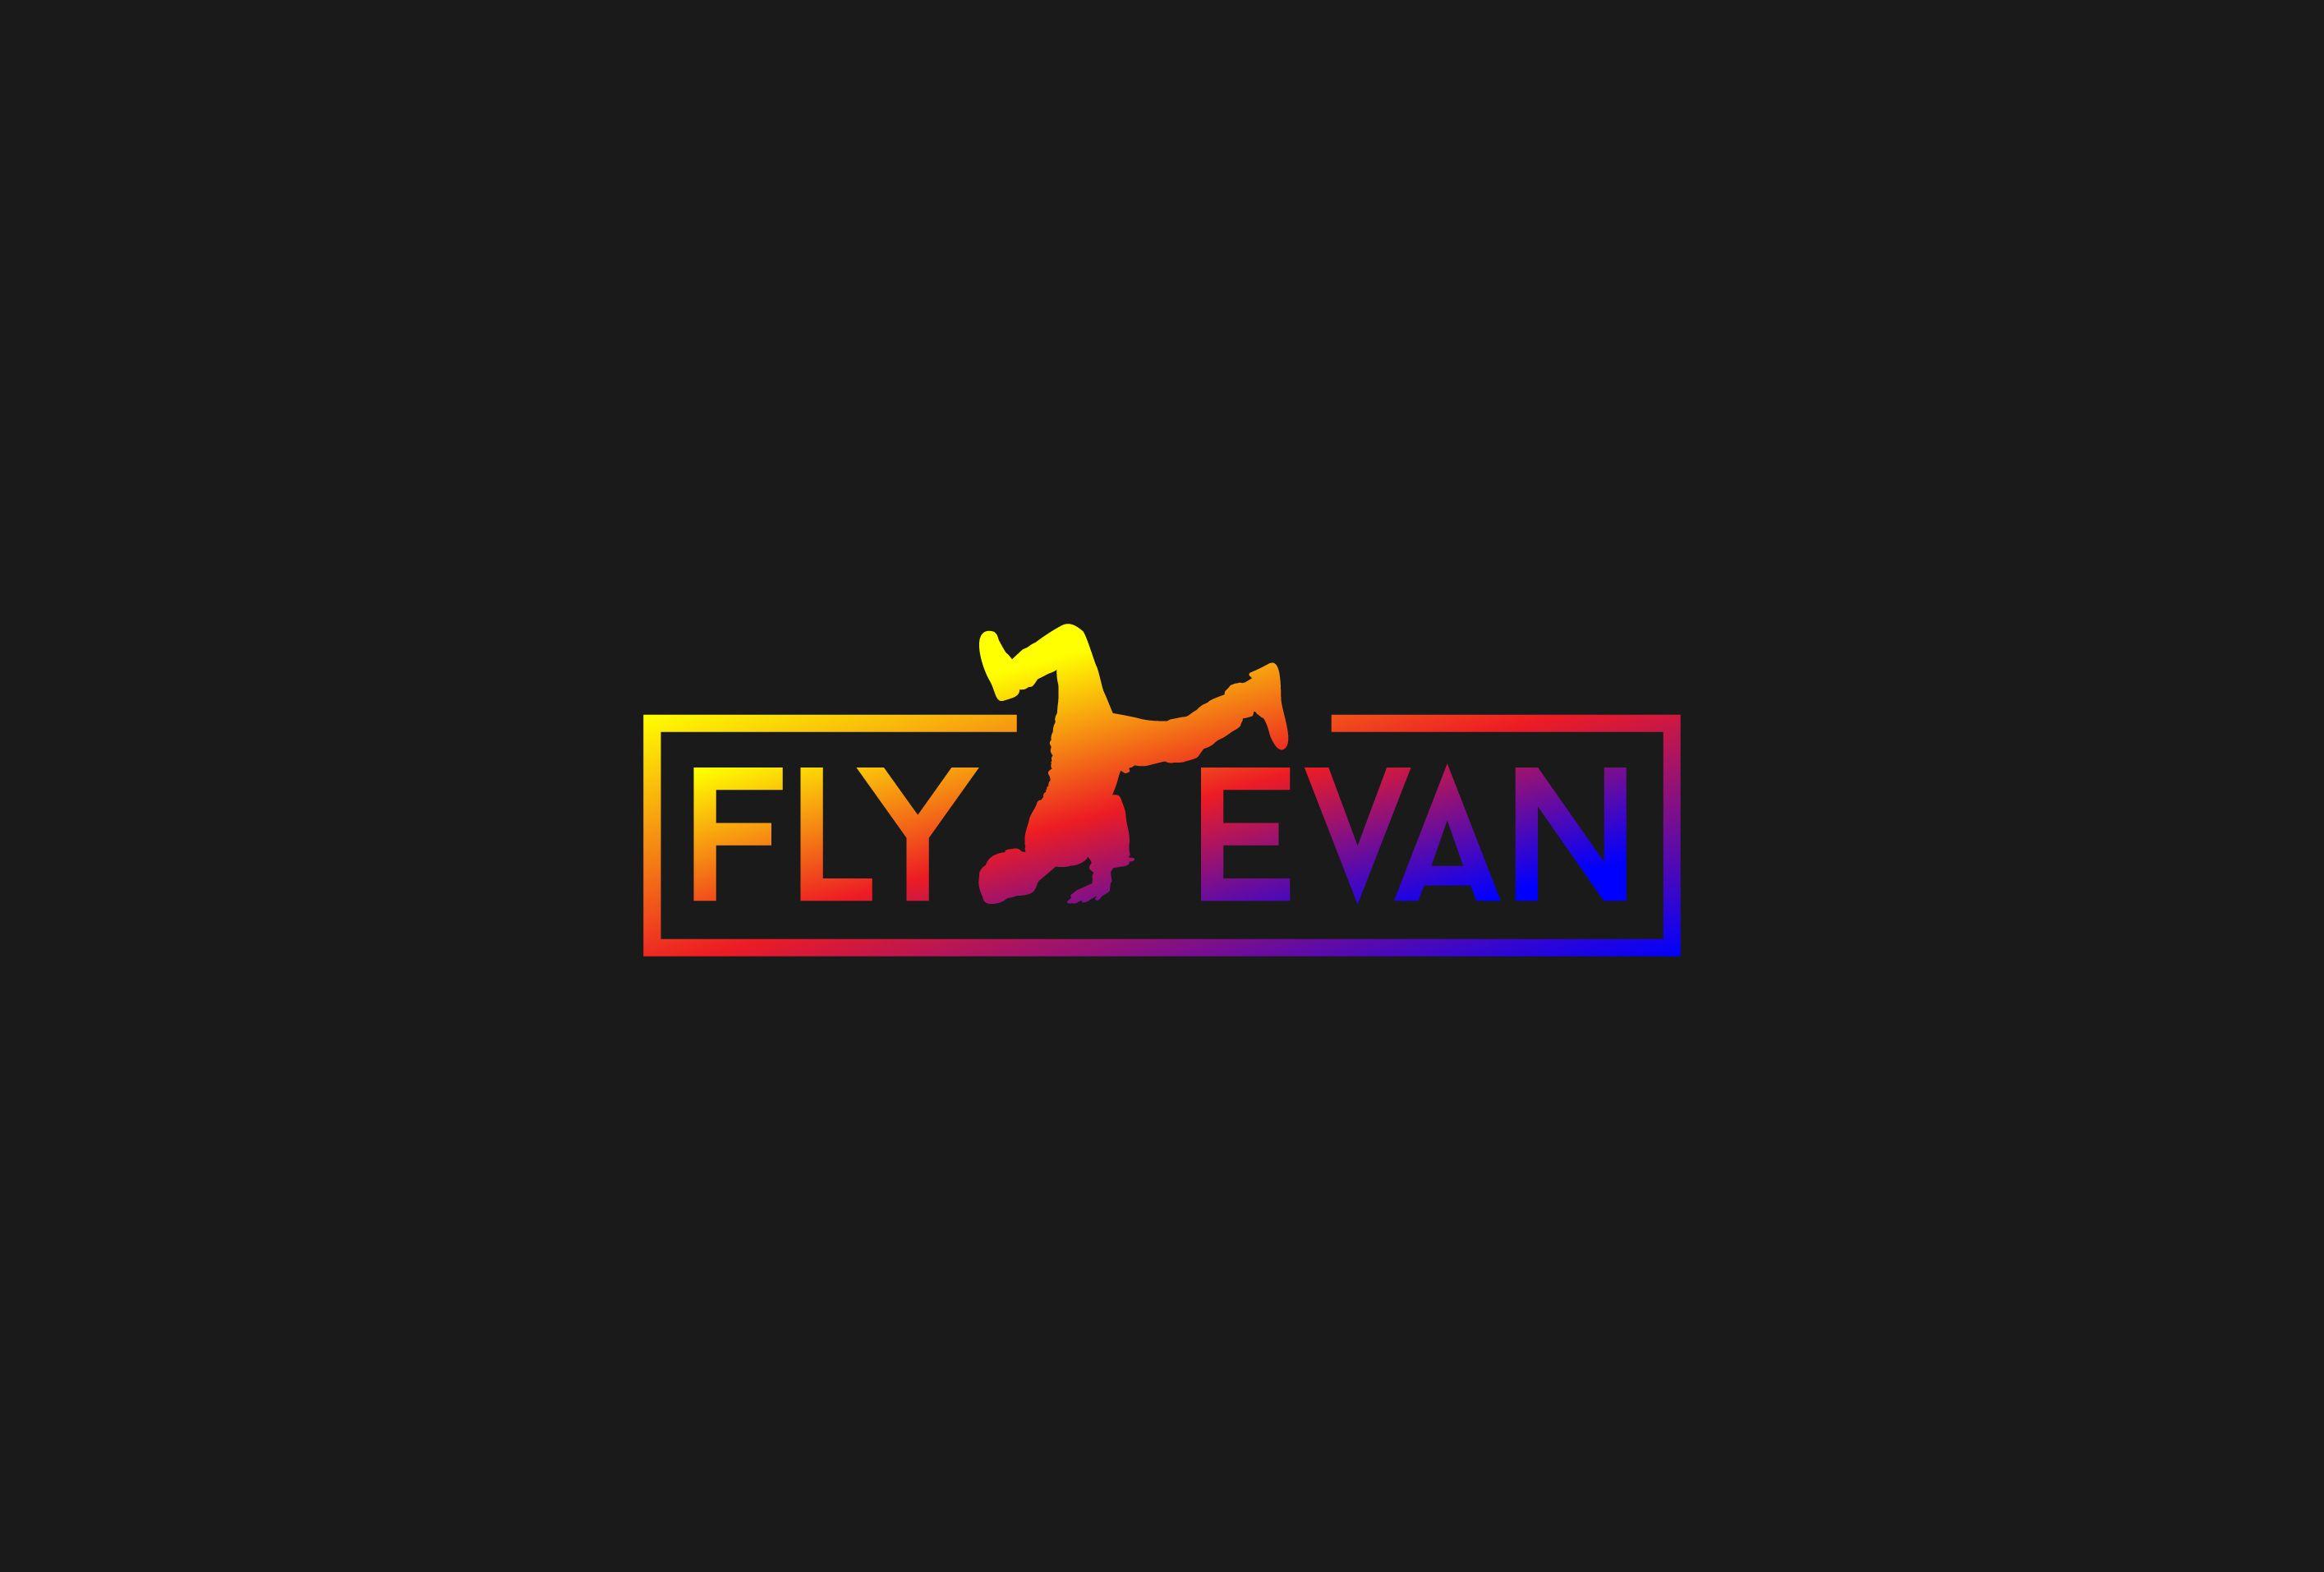 Evan Logo - FlyEvan.com Personal Branding Child Entertainer Case Study